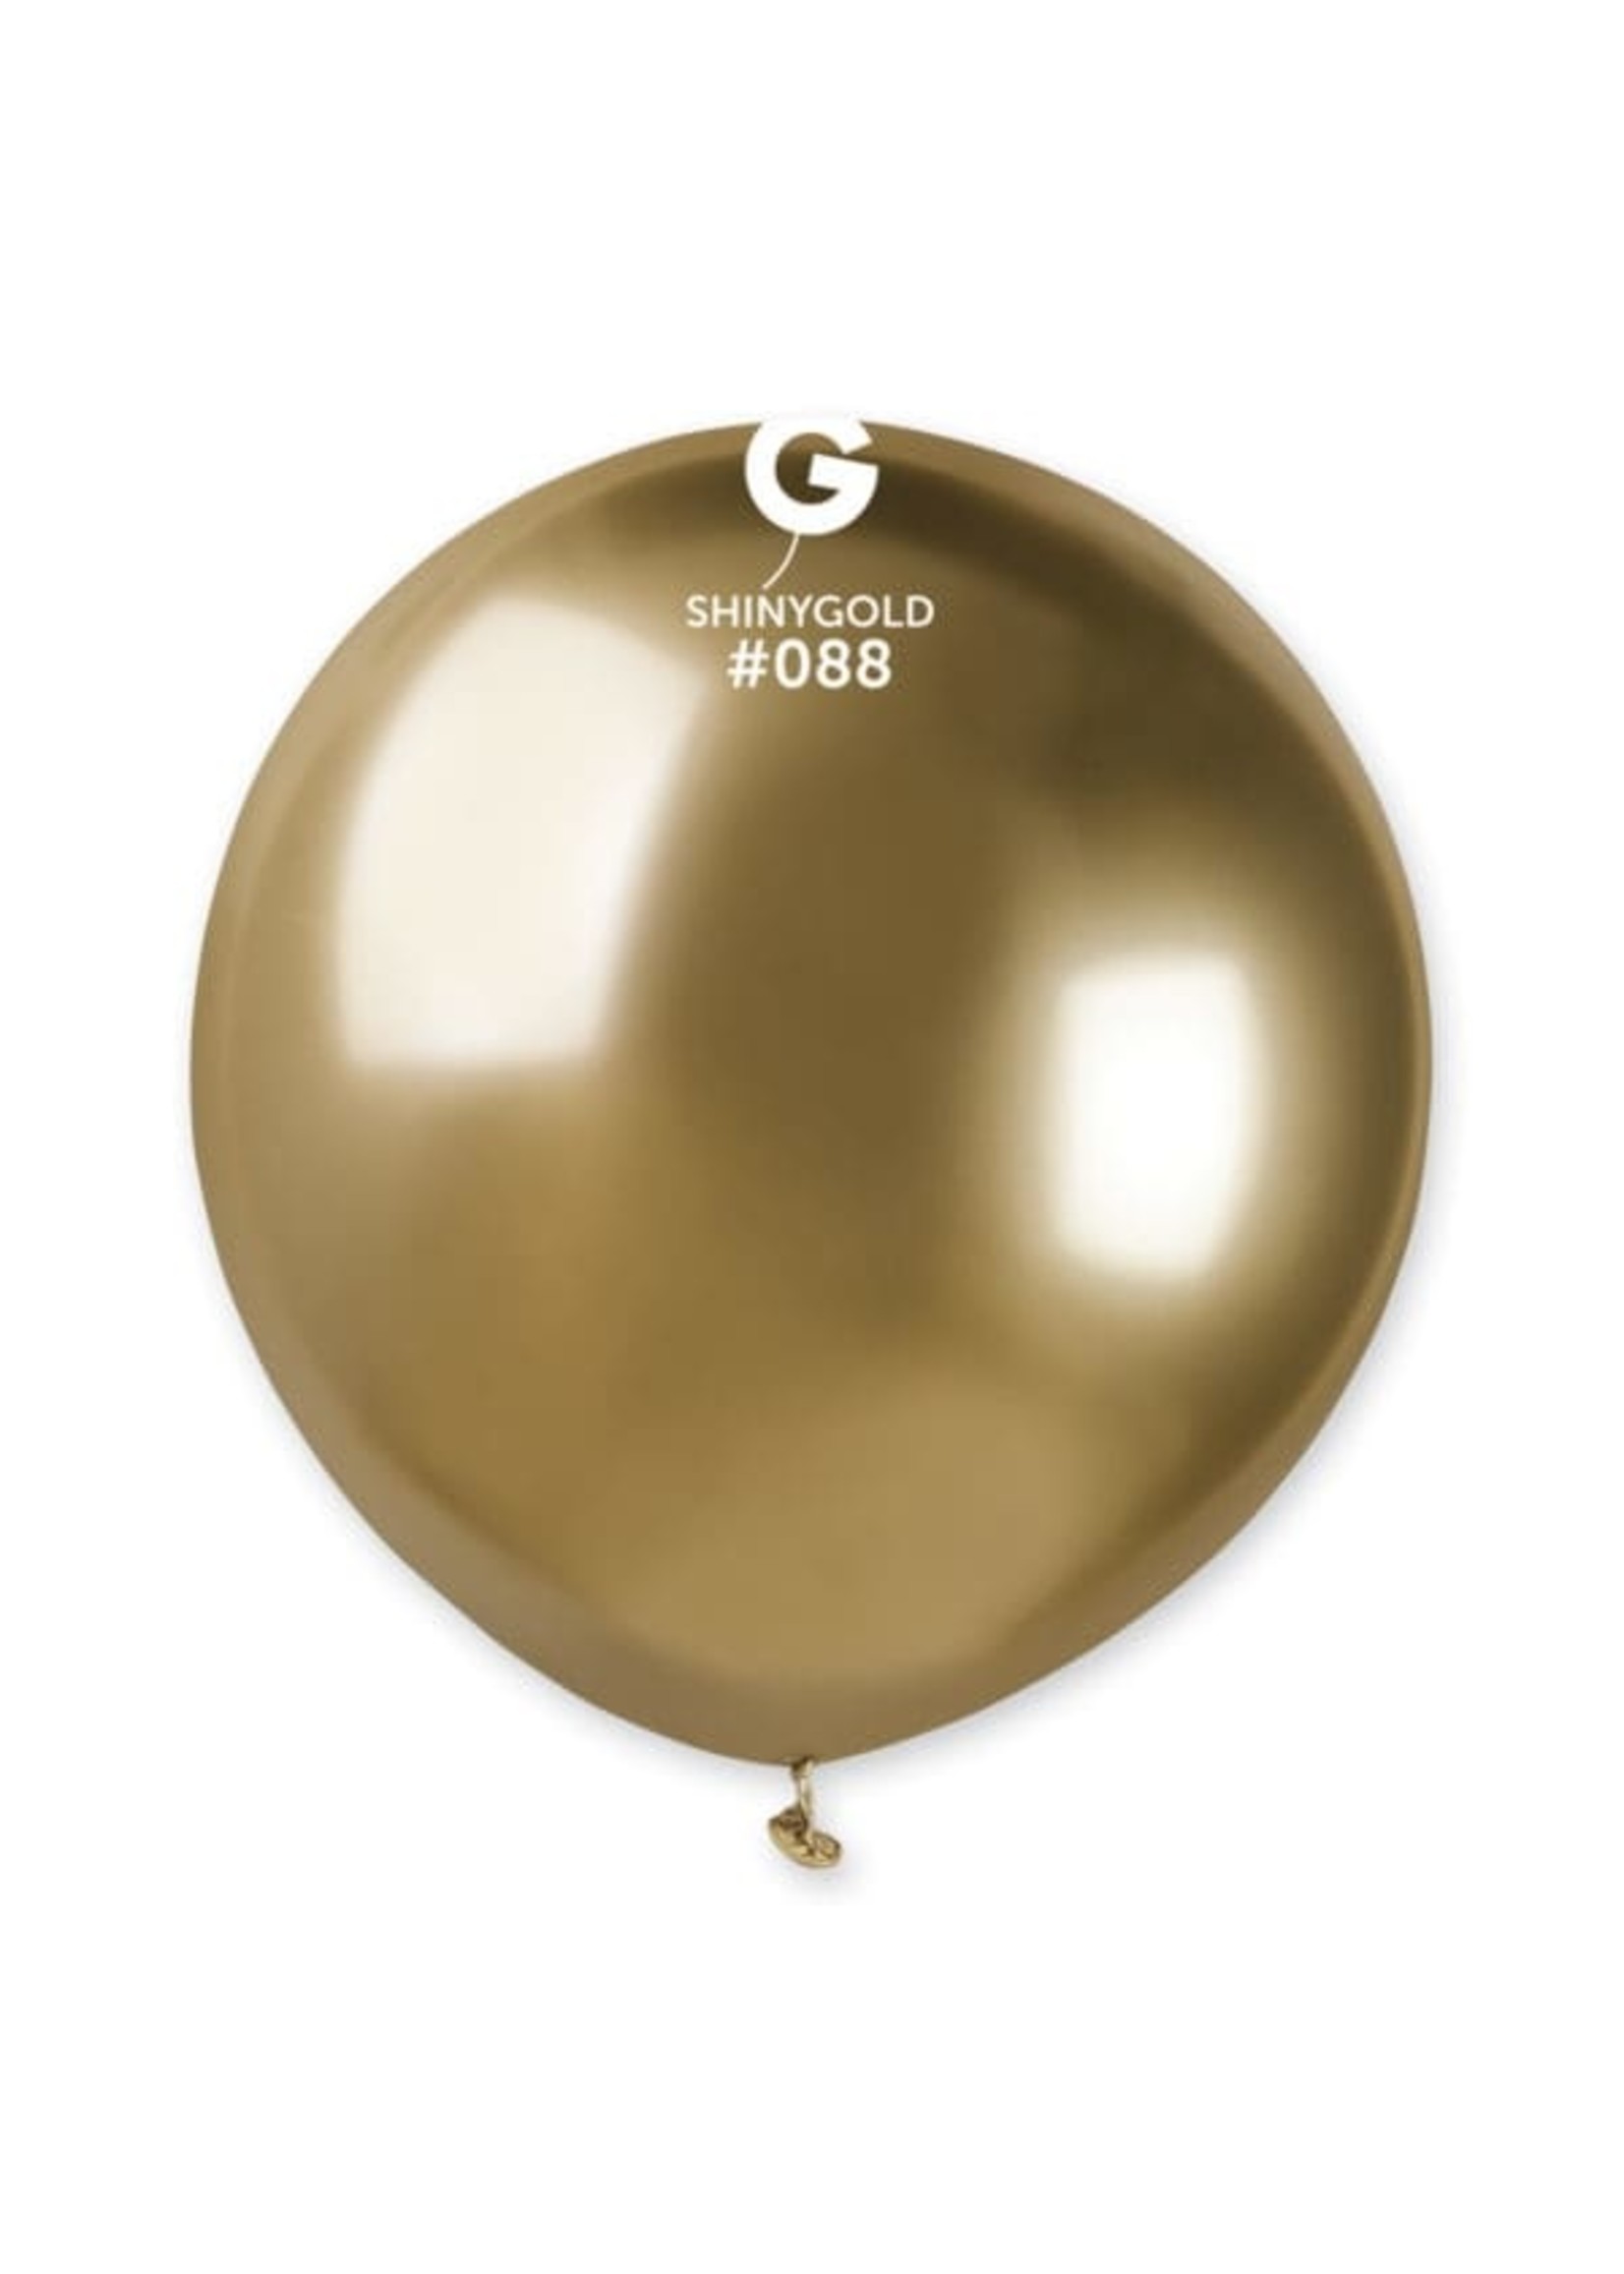 GEMAR Shiny Gold #088 Latex Balloons, 19in, 25ct